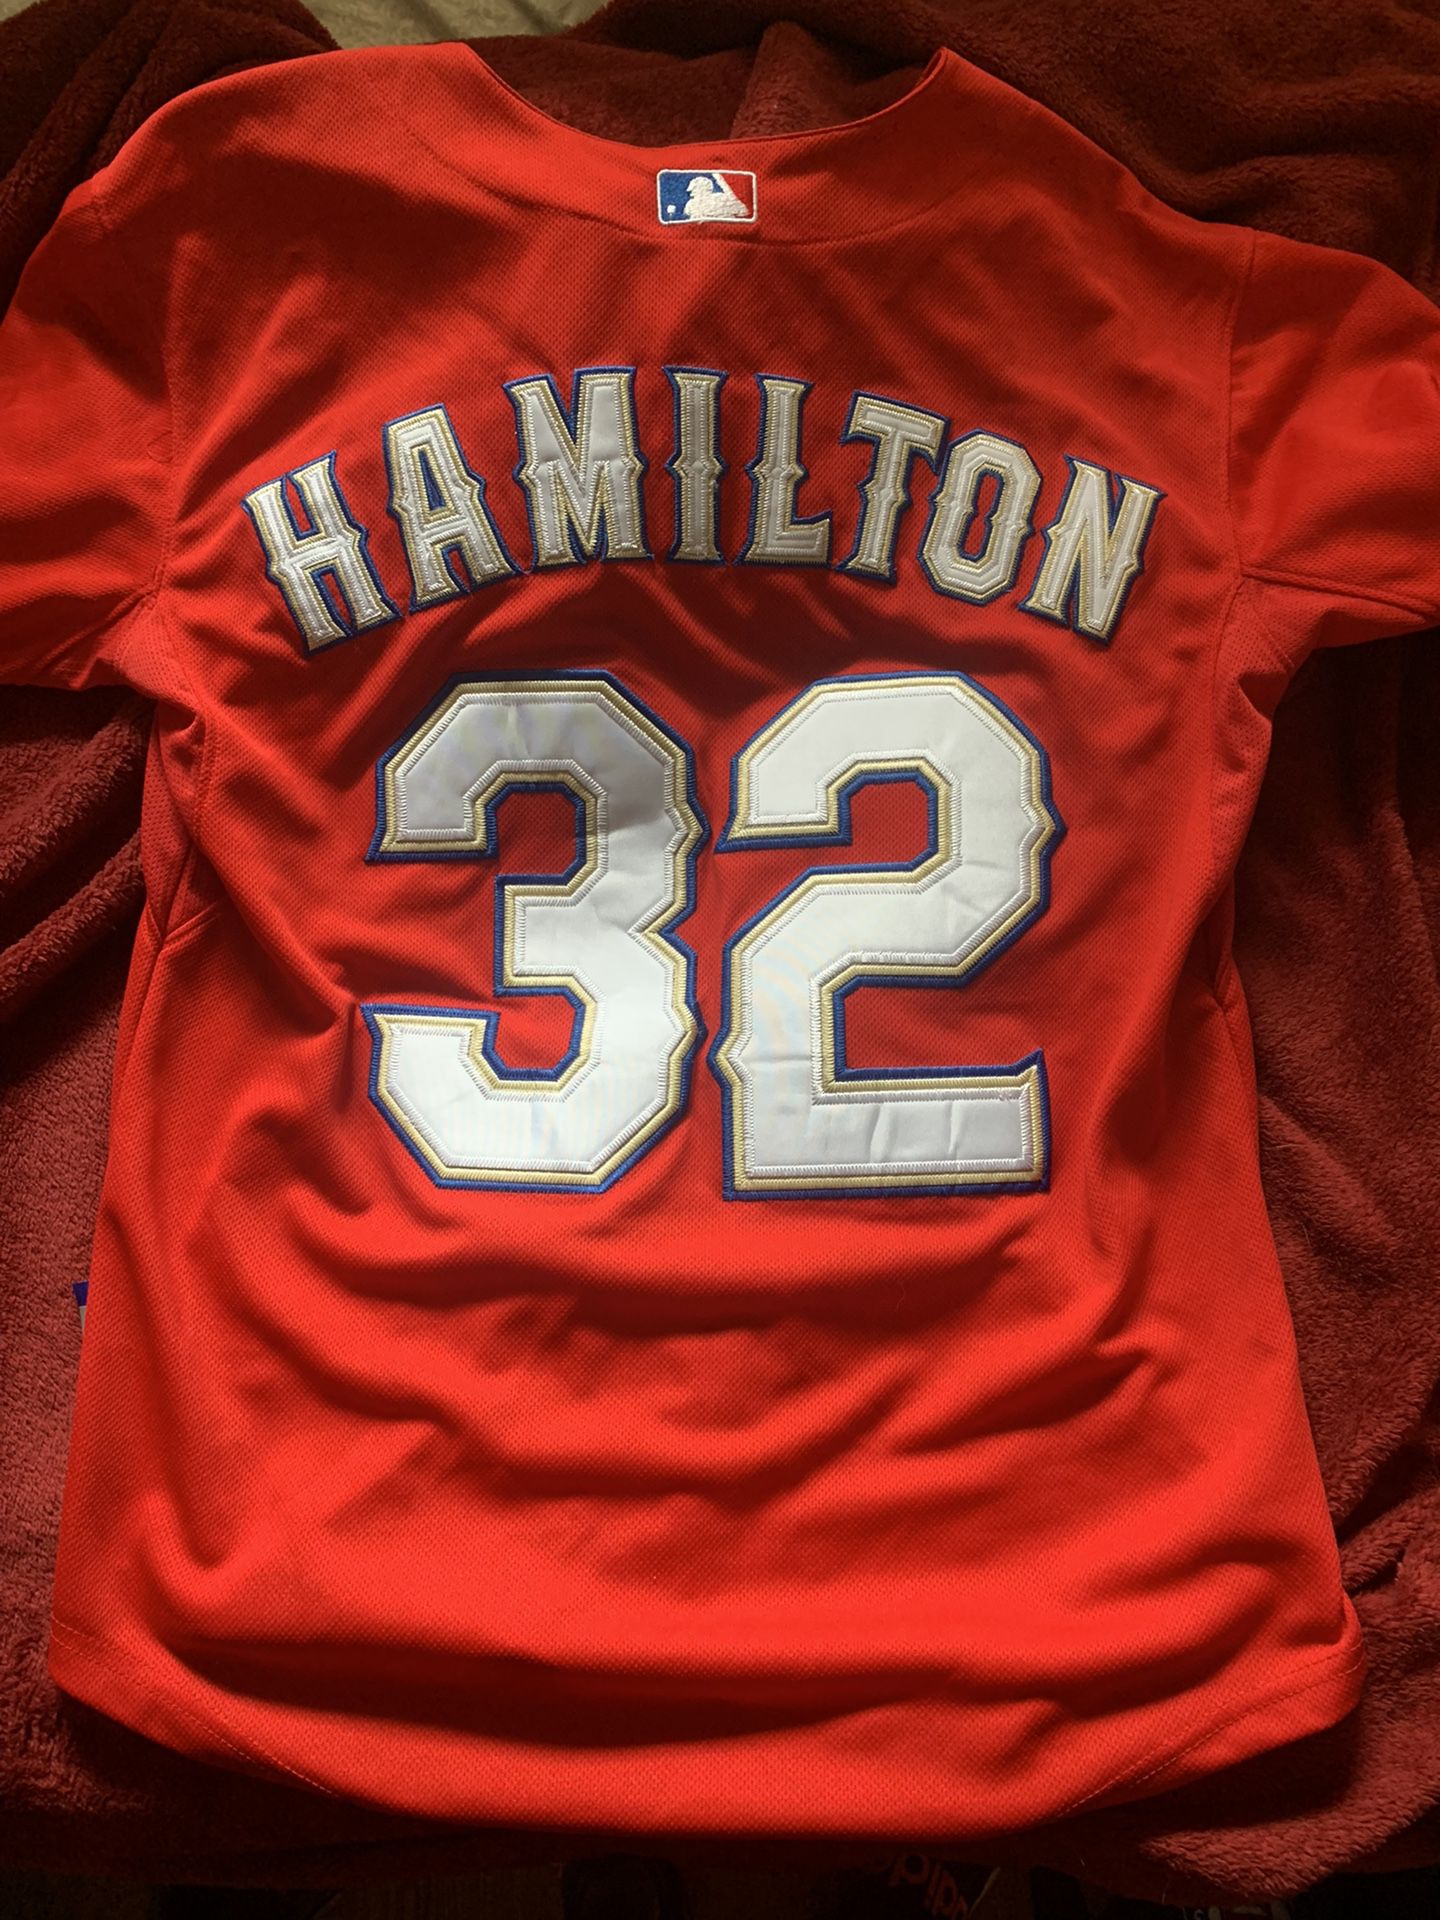 2010 World Series Josh Hamilton Jersey, Red, Size 48